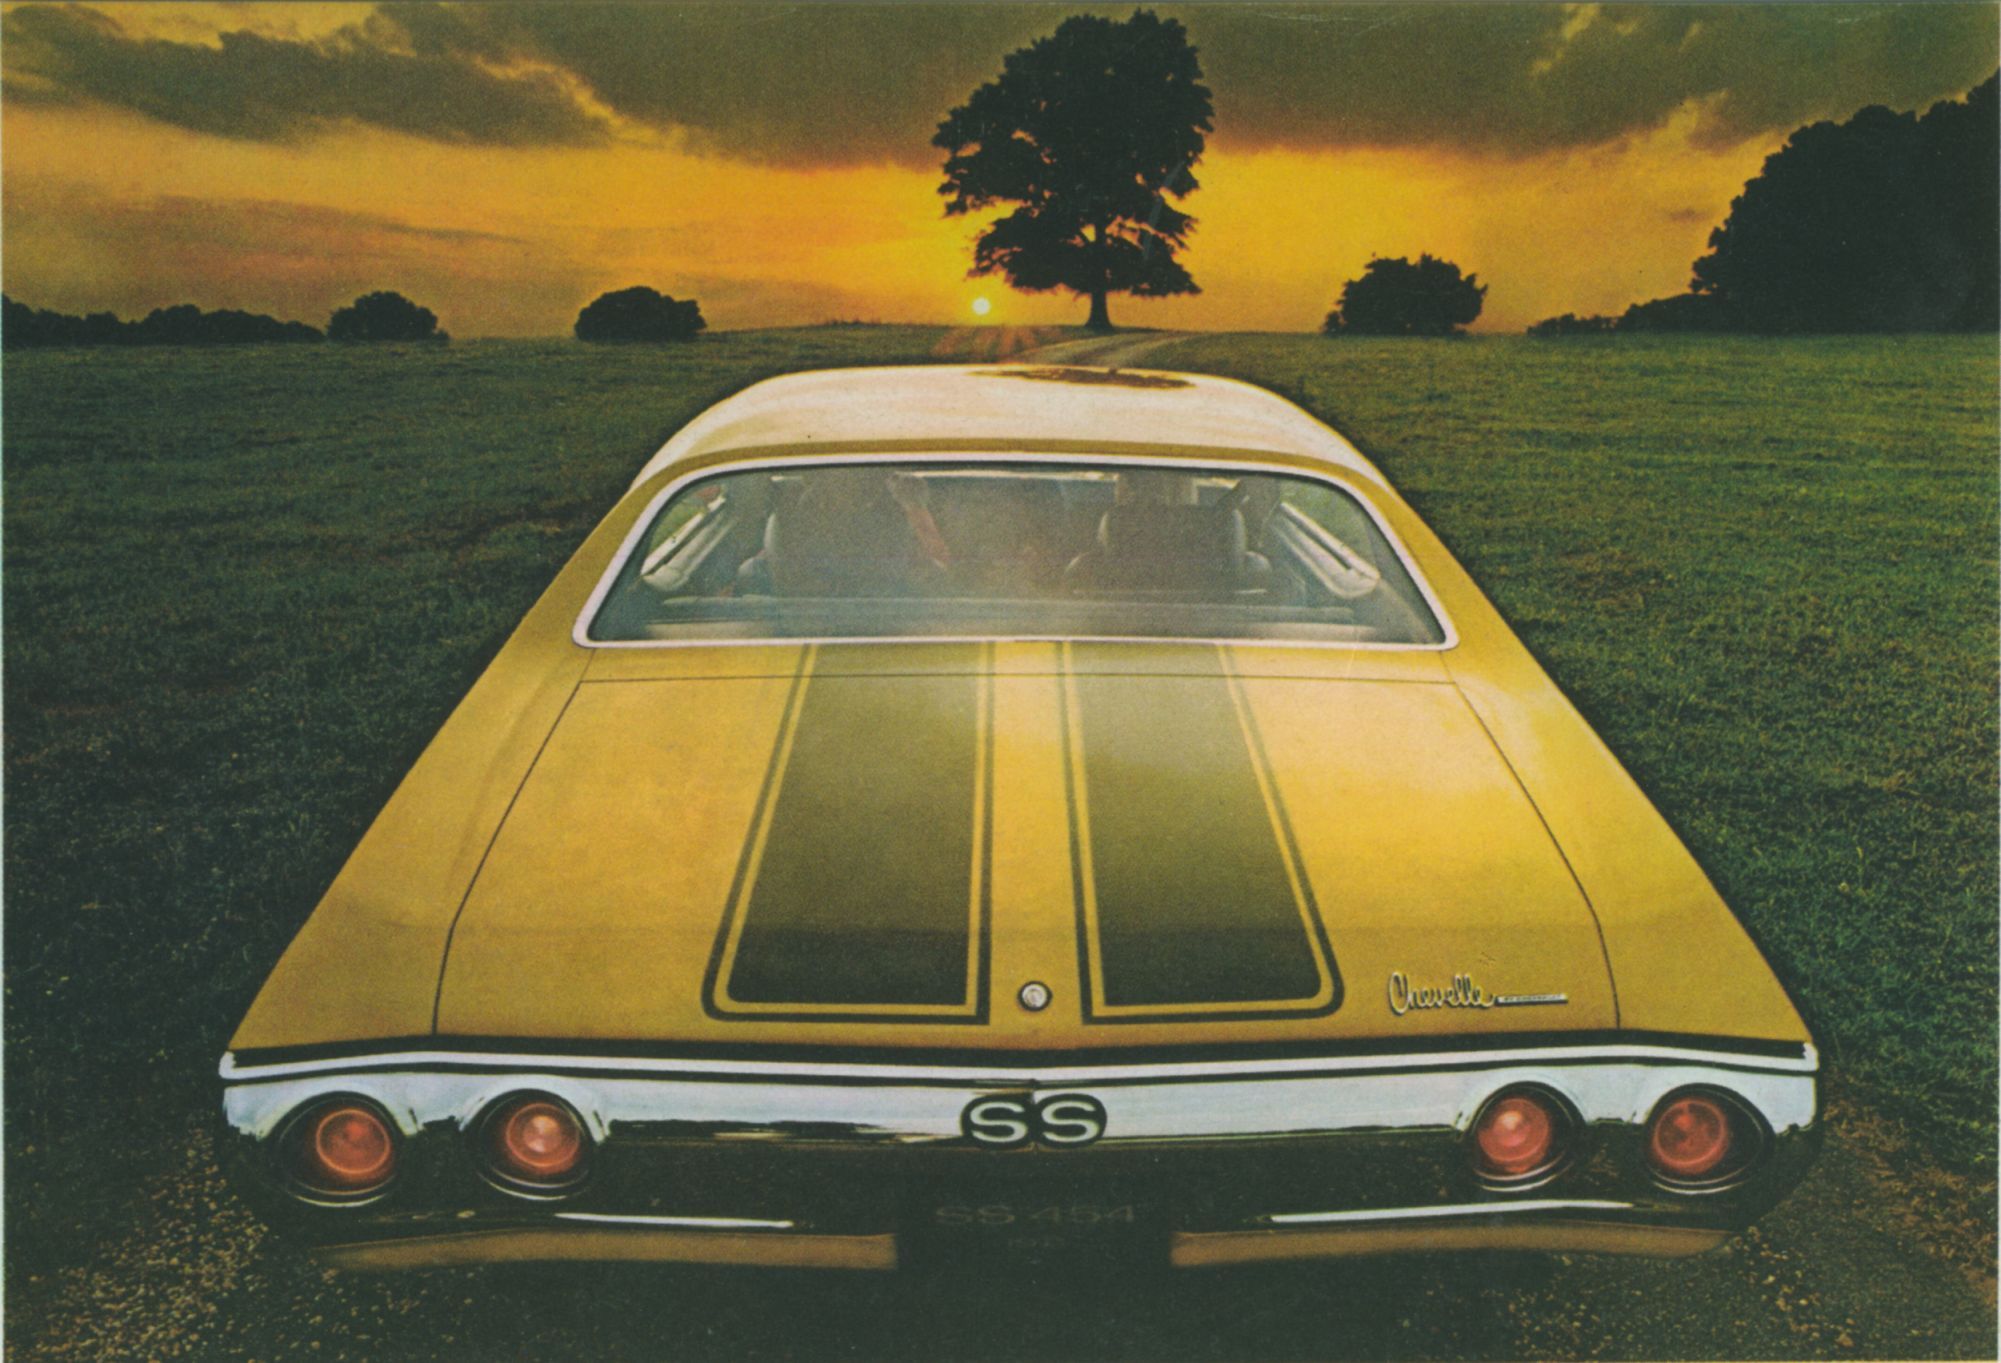 1971 Chev Chevelle Brochure Page 1